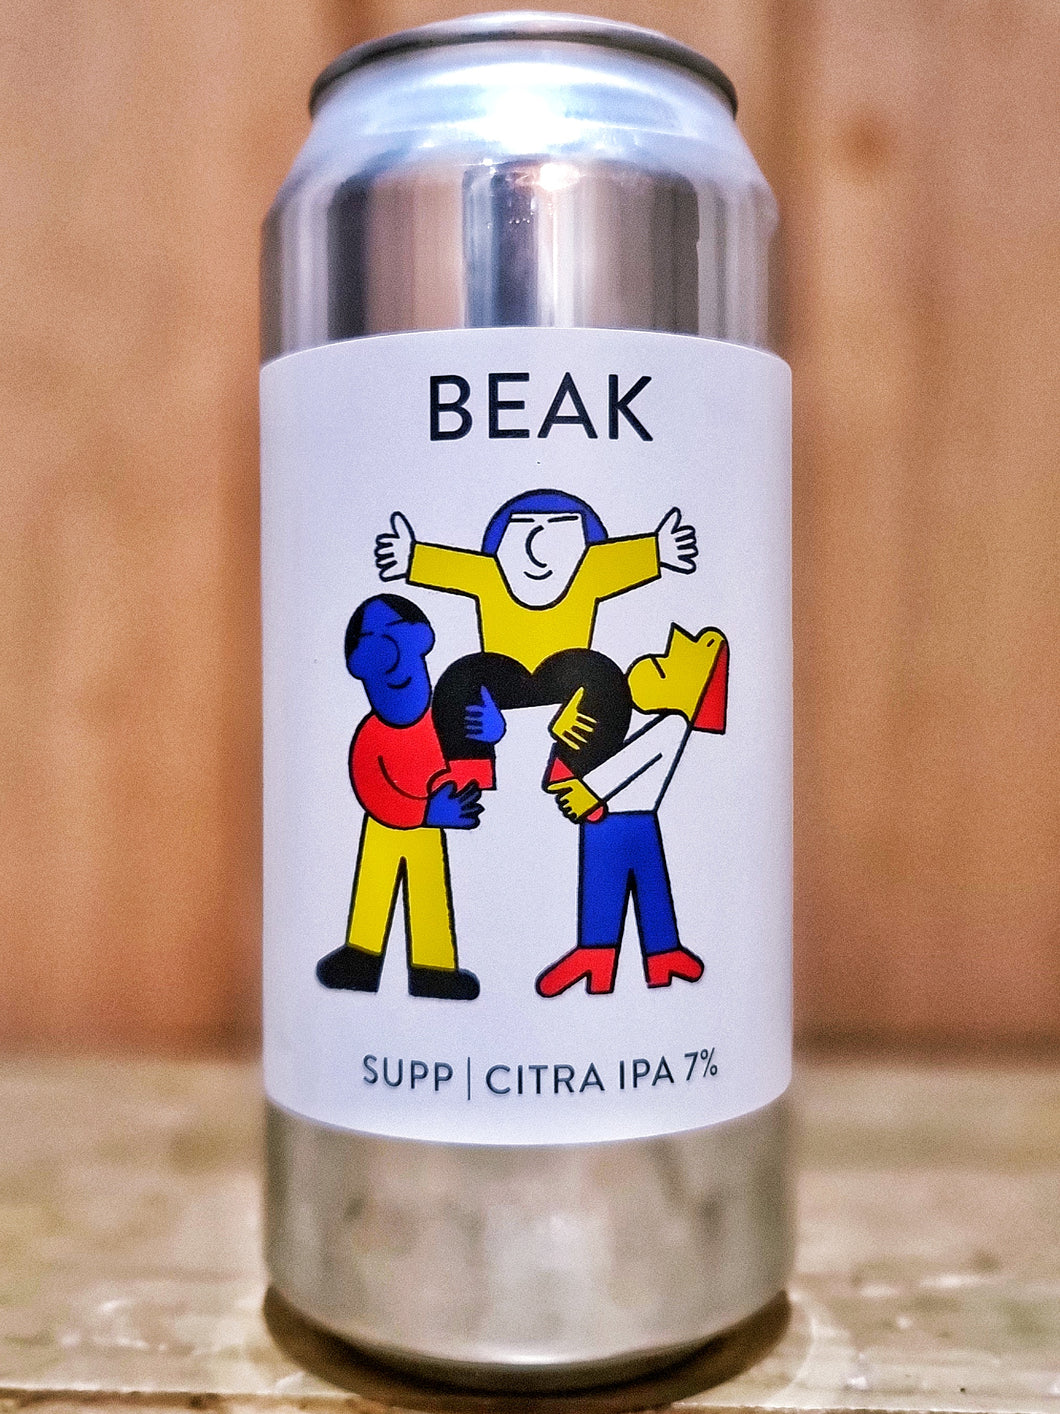 Beak Brewery - Supp